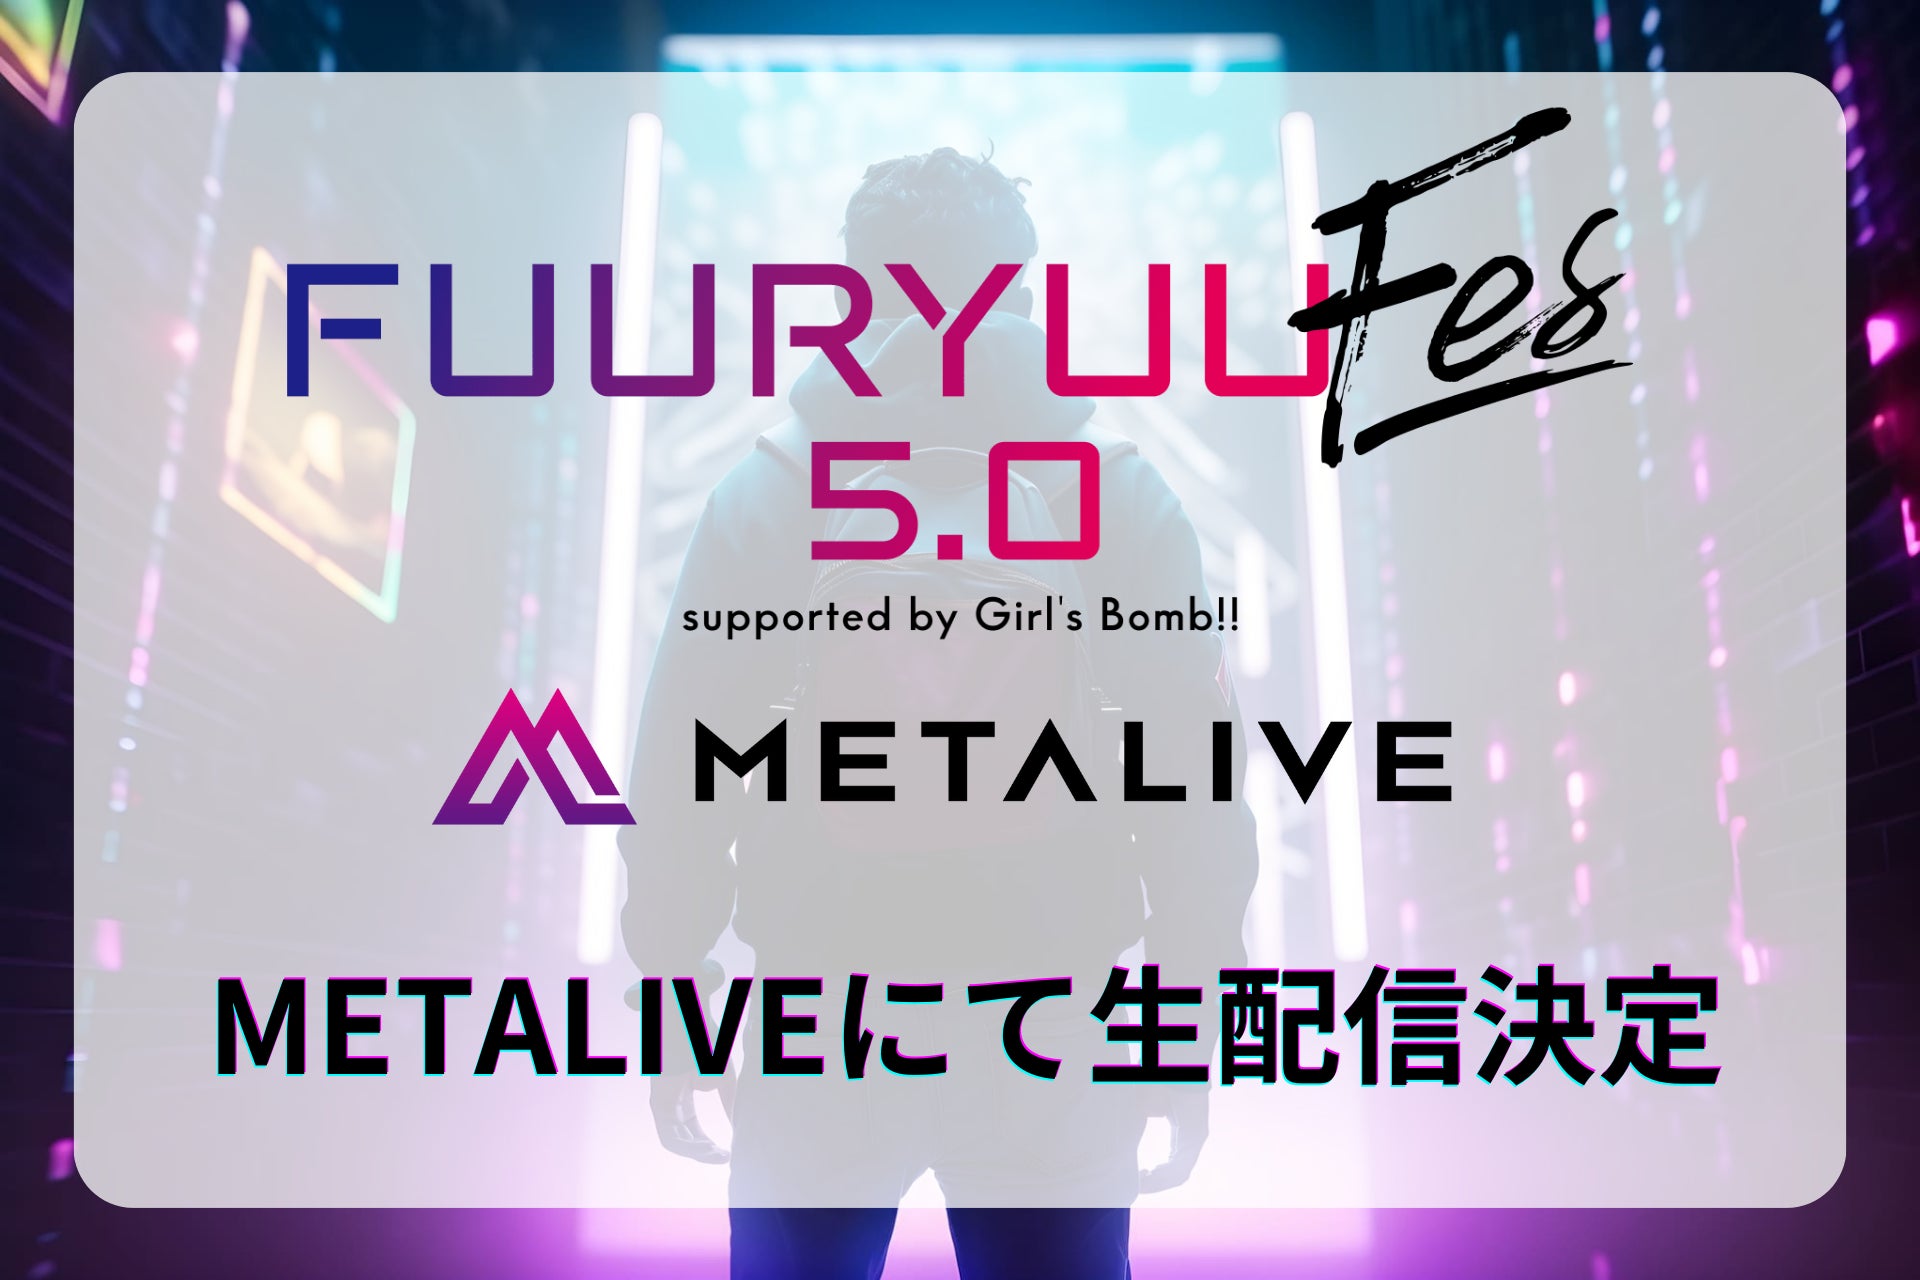 METALIVE、アイドルが集結する次世代型ステージ「FUURYUUFES 5.0 supported by Girl’s Bomb!!」にメディアパートナーとして参加！ライブパフォーマンスを生配信